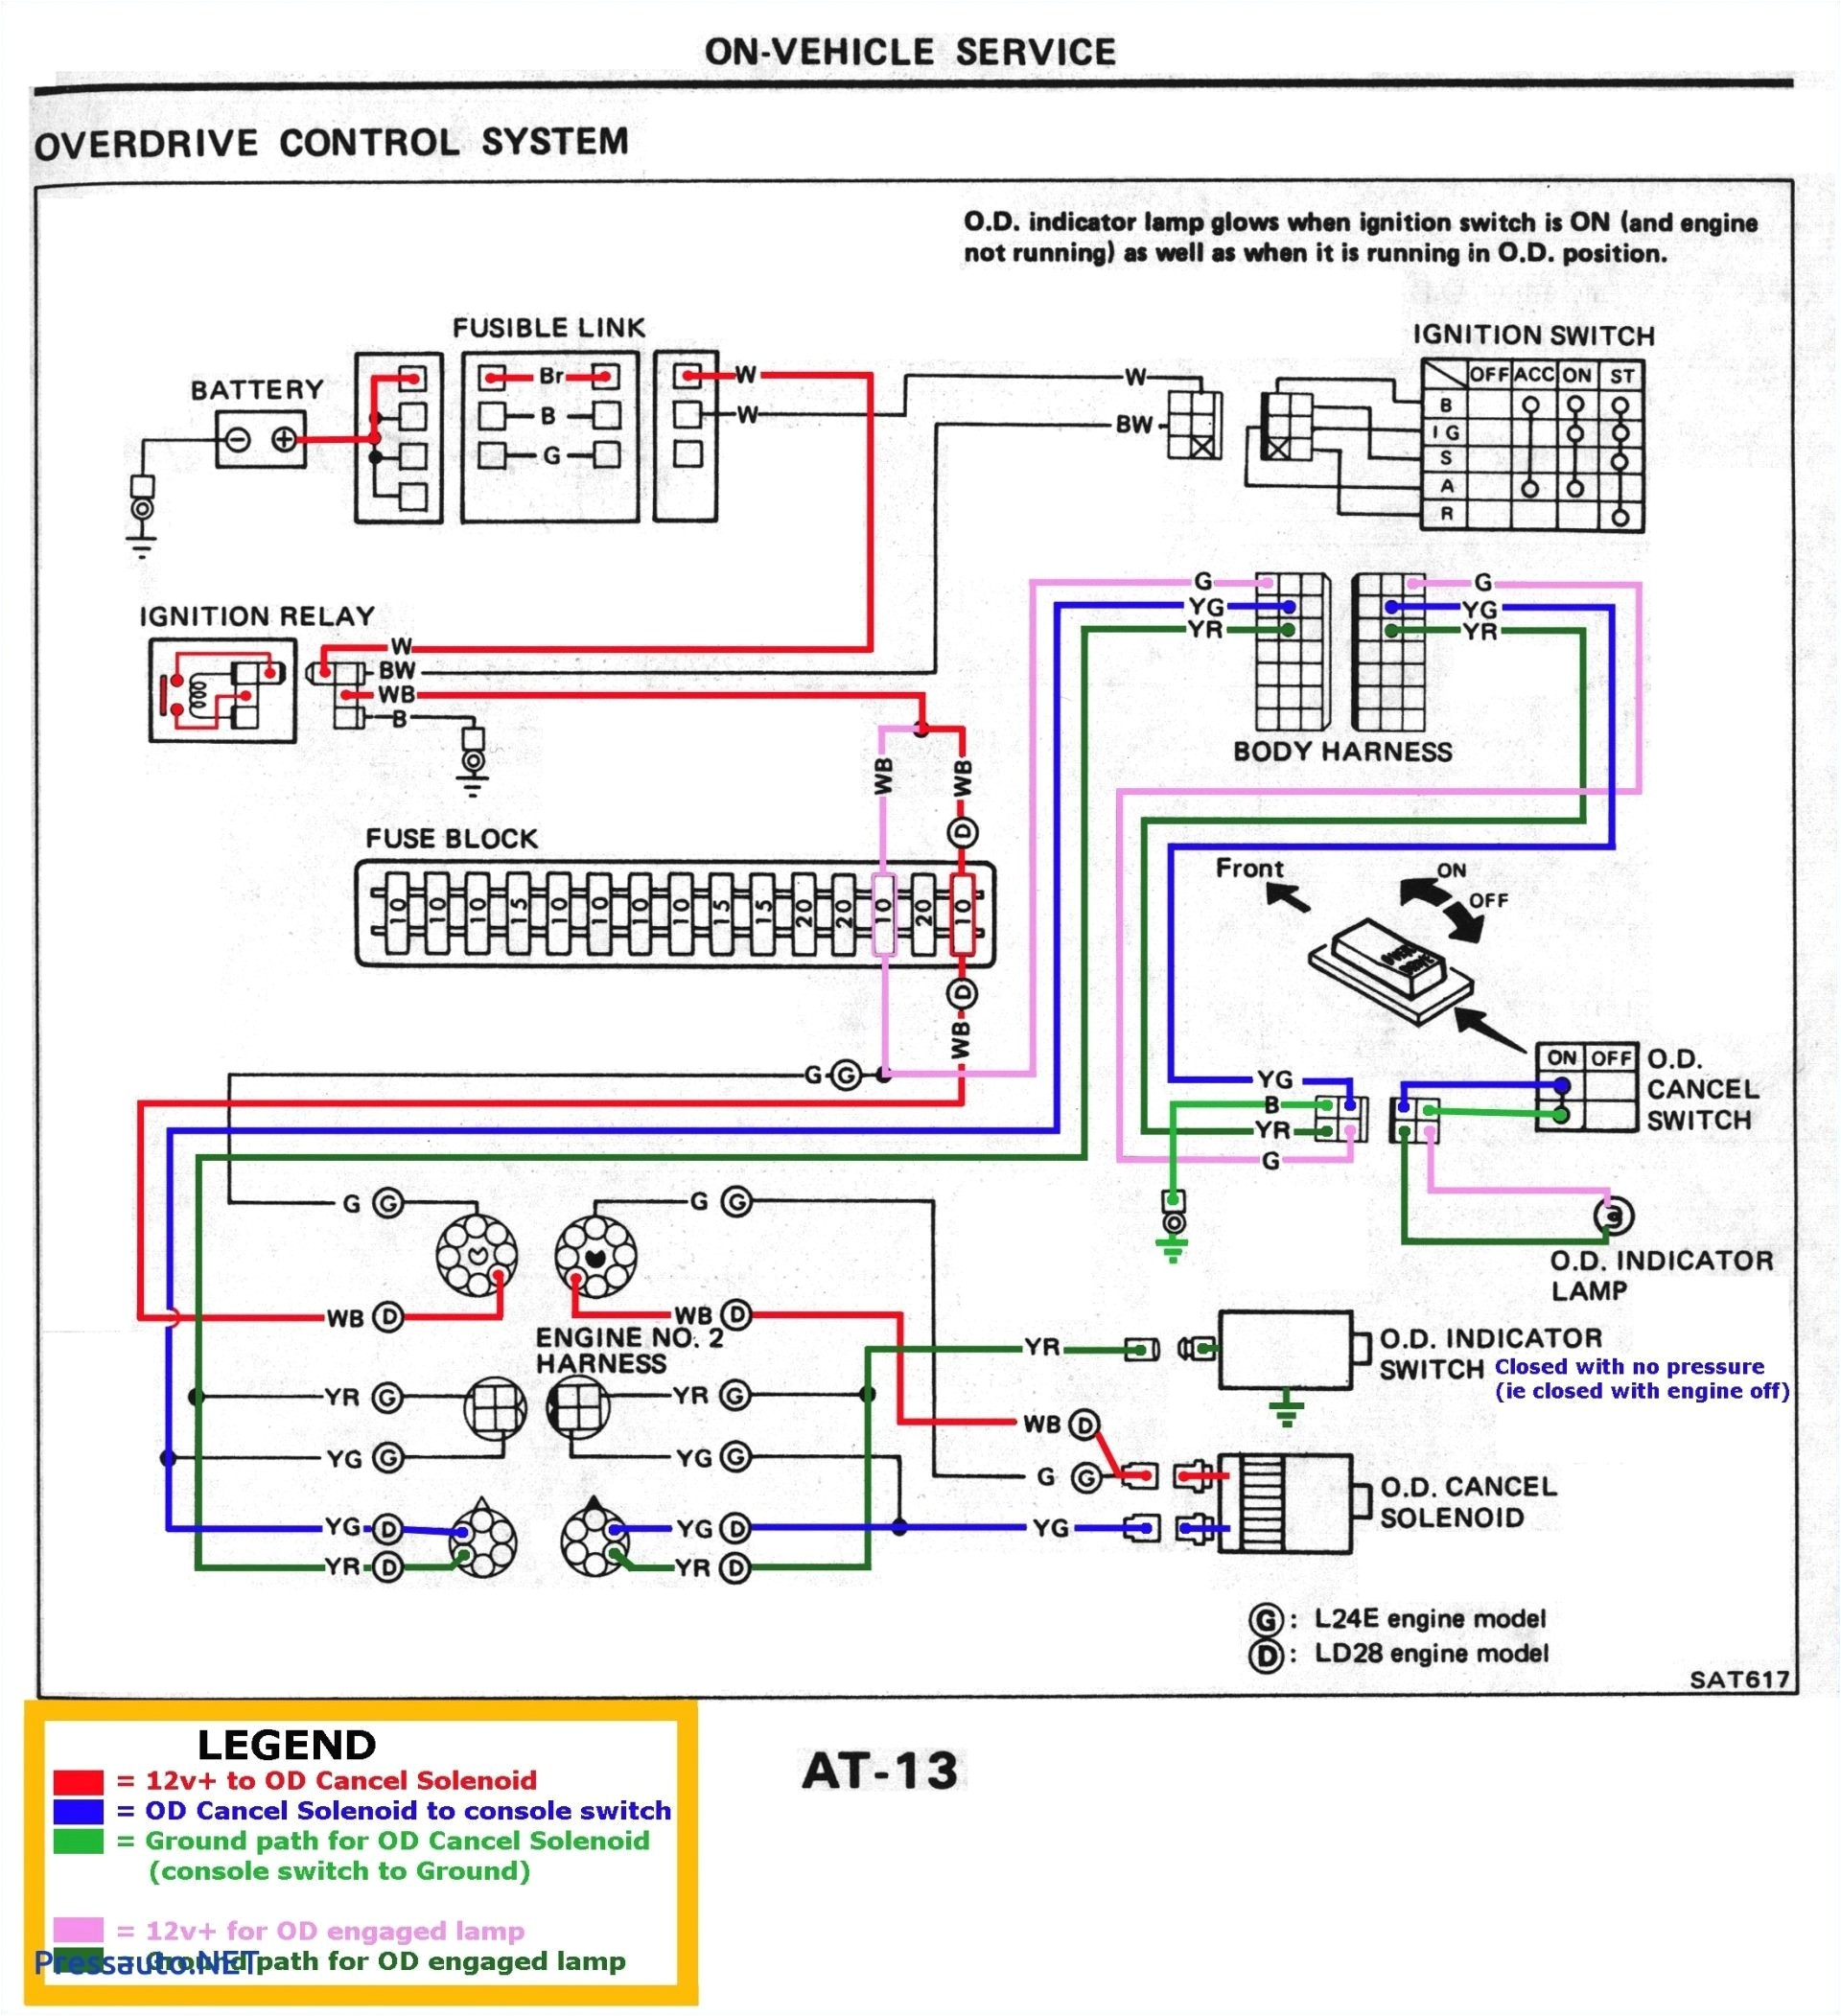 fj1200 wiring diagram best of clymer m397 service u0026 repair manualfj1200 wiring diagram new diagrams